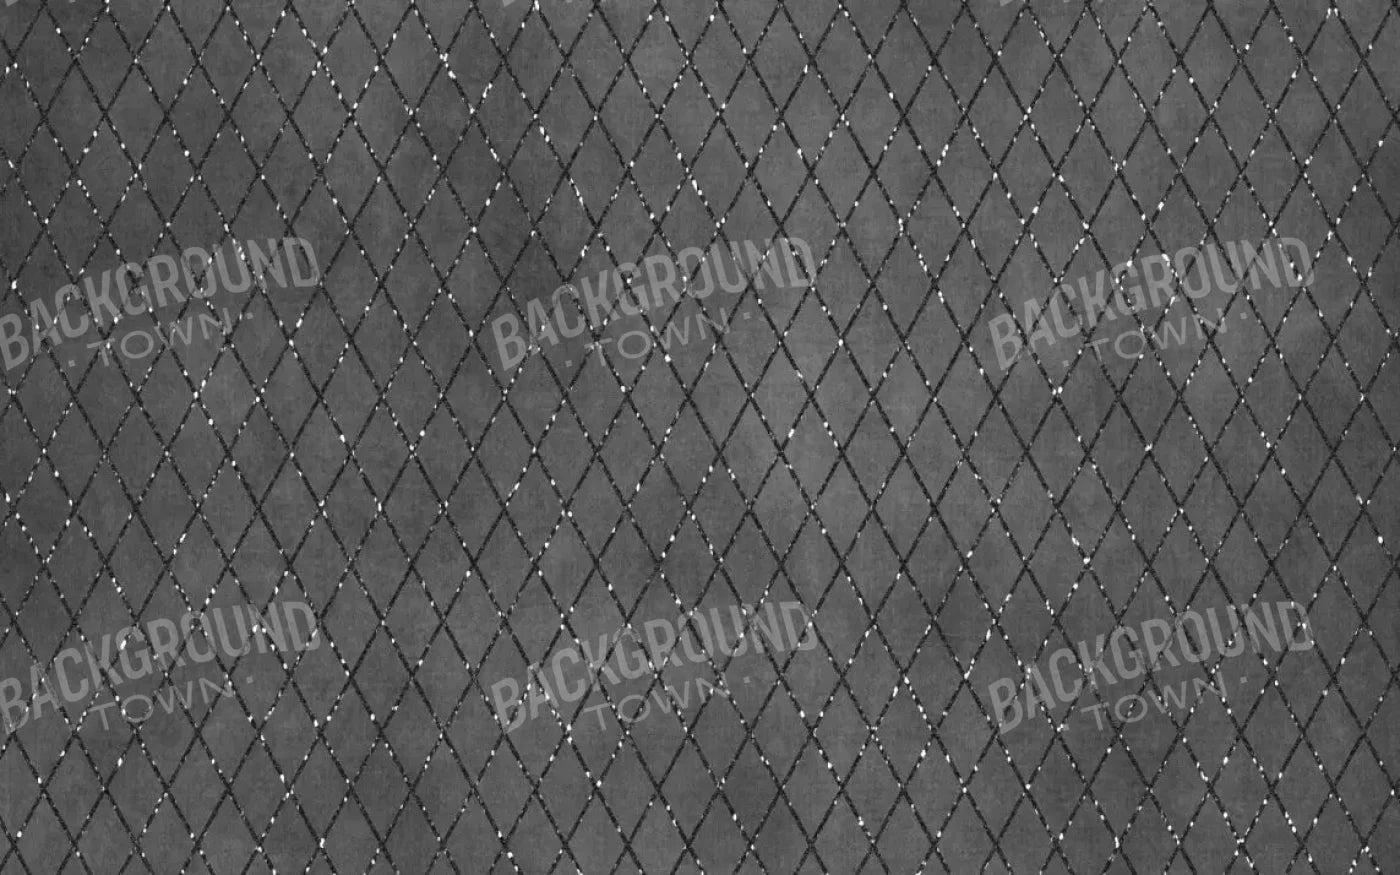 Black Tie Gray 14X9 Ultracloth ( 168 X 108 Inch ) Backdrop